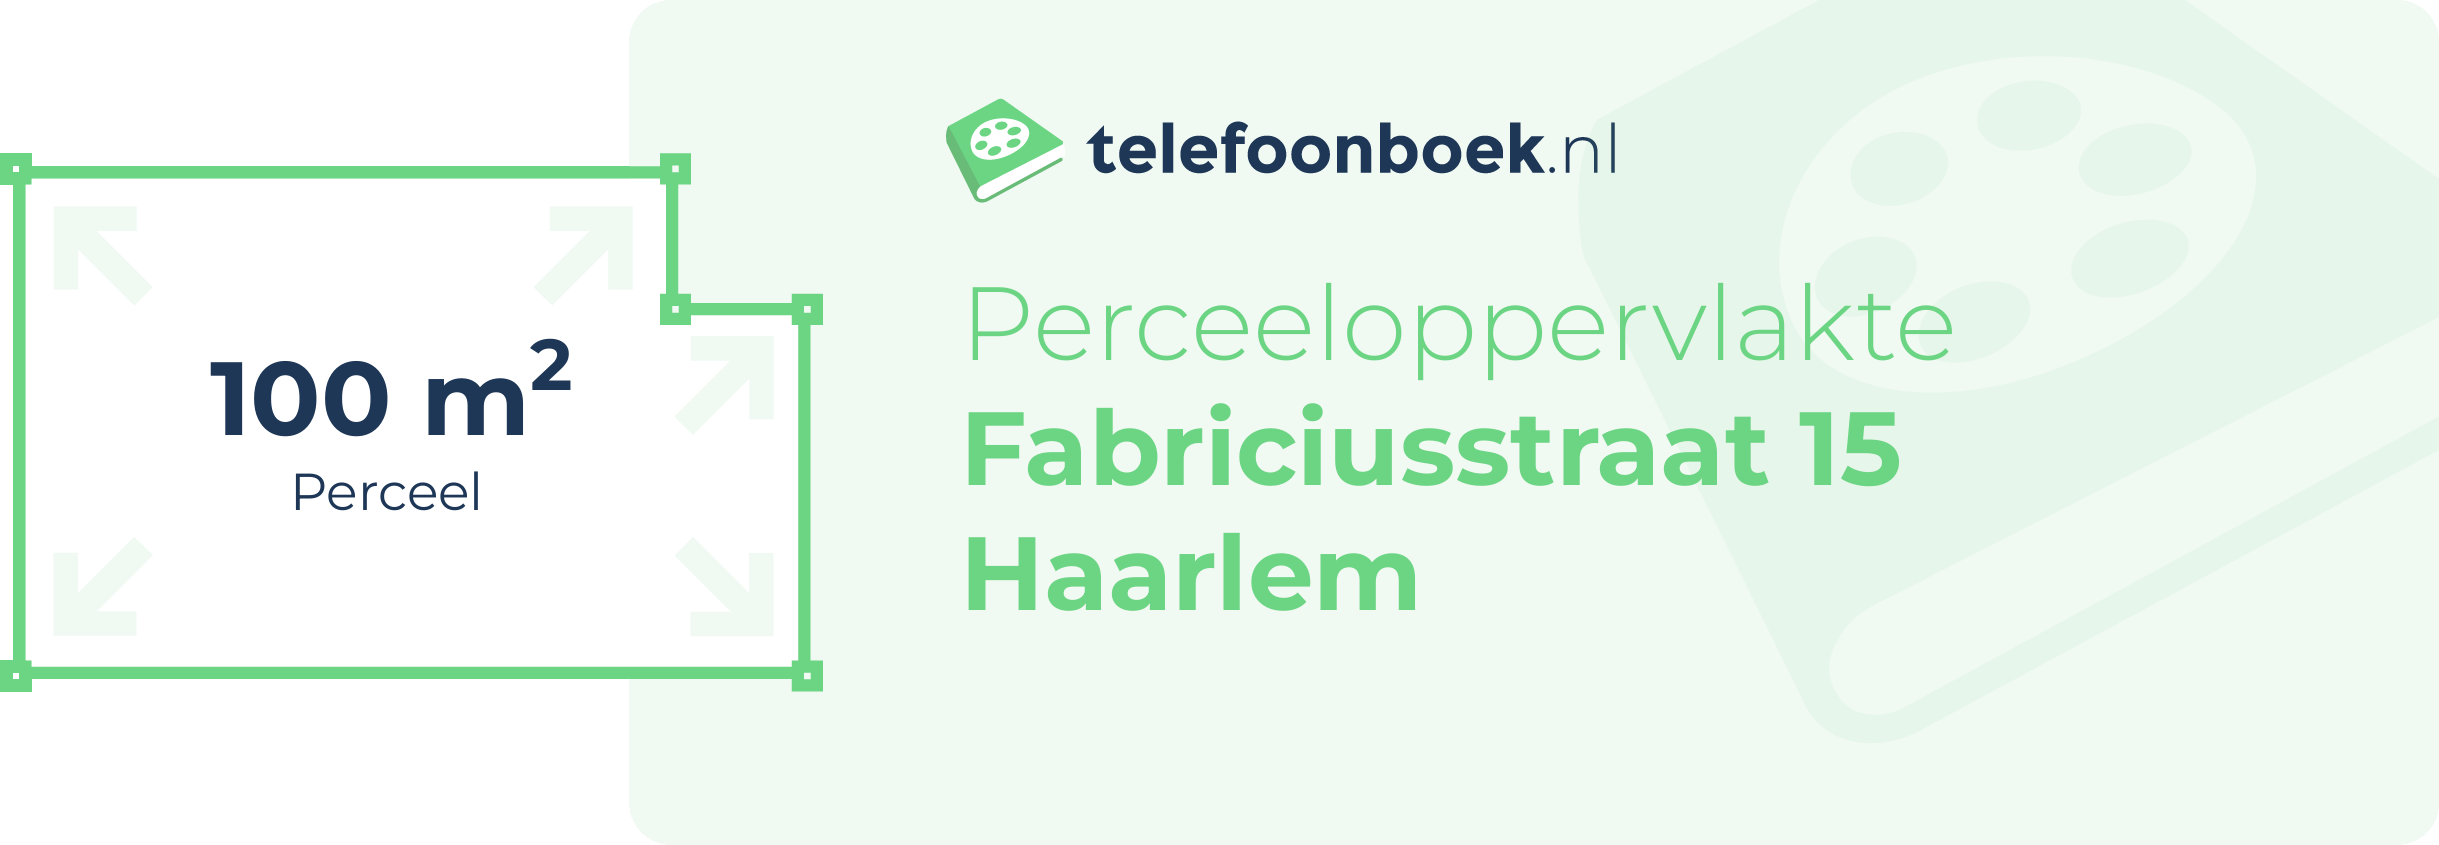 Perceeloppervlakte Fabriciusstraat 15 Haarlem